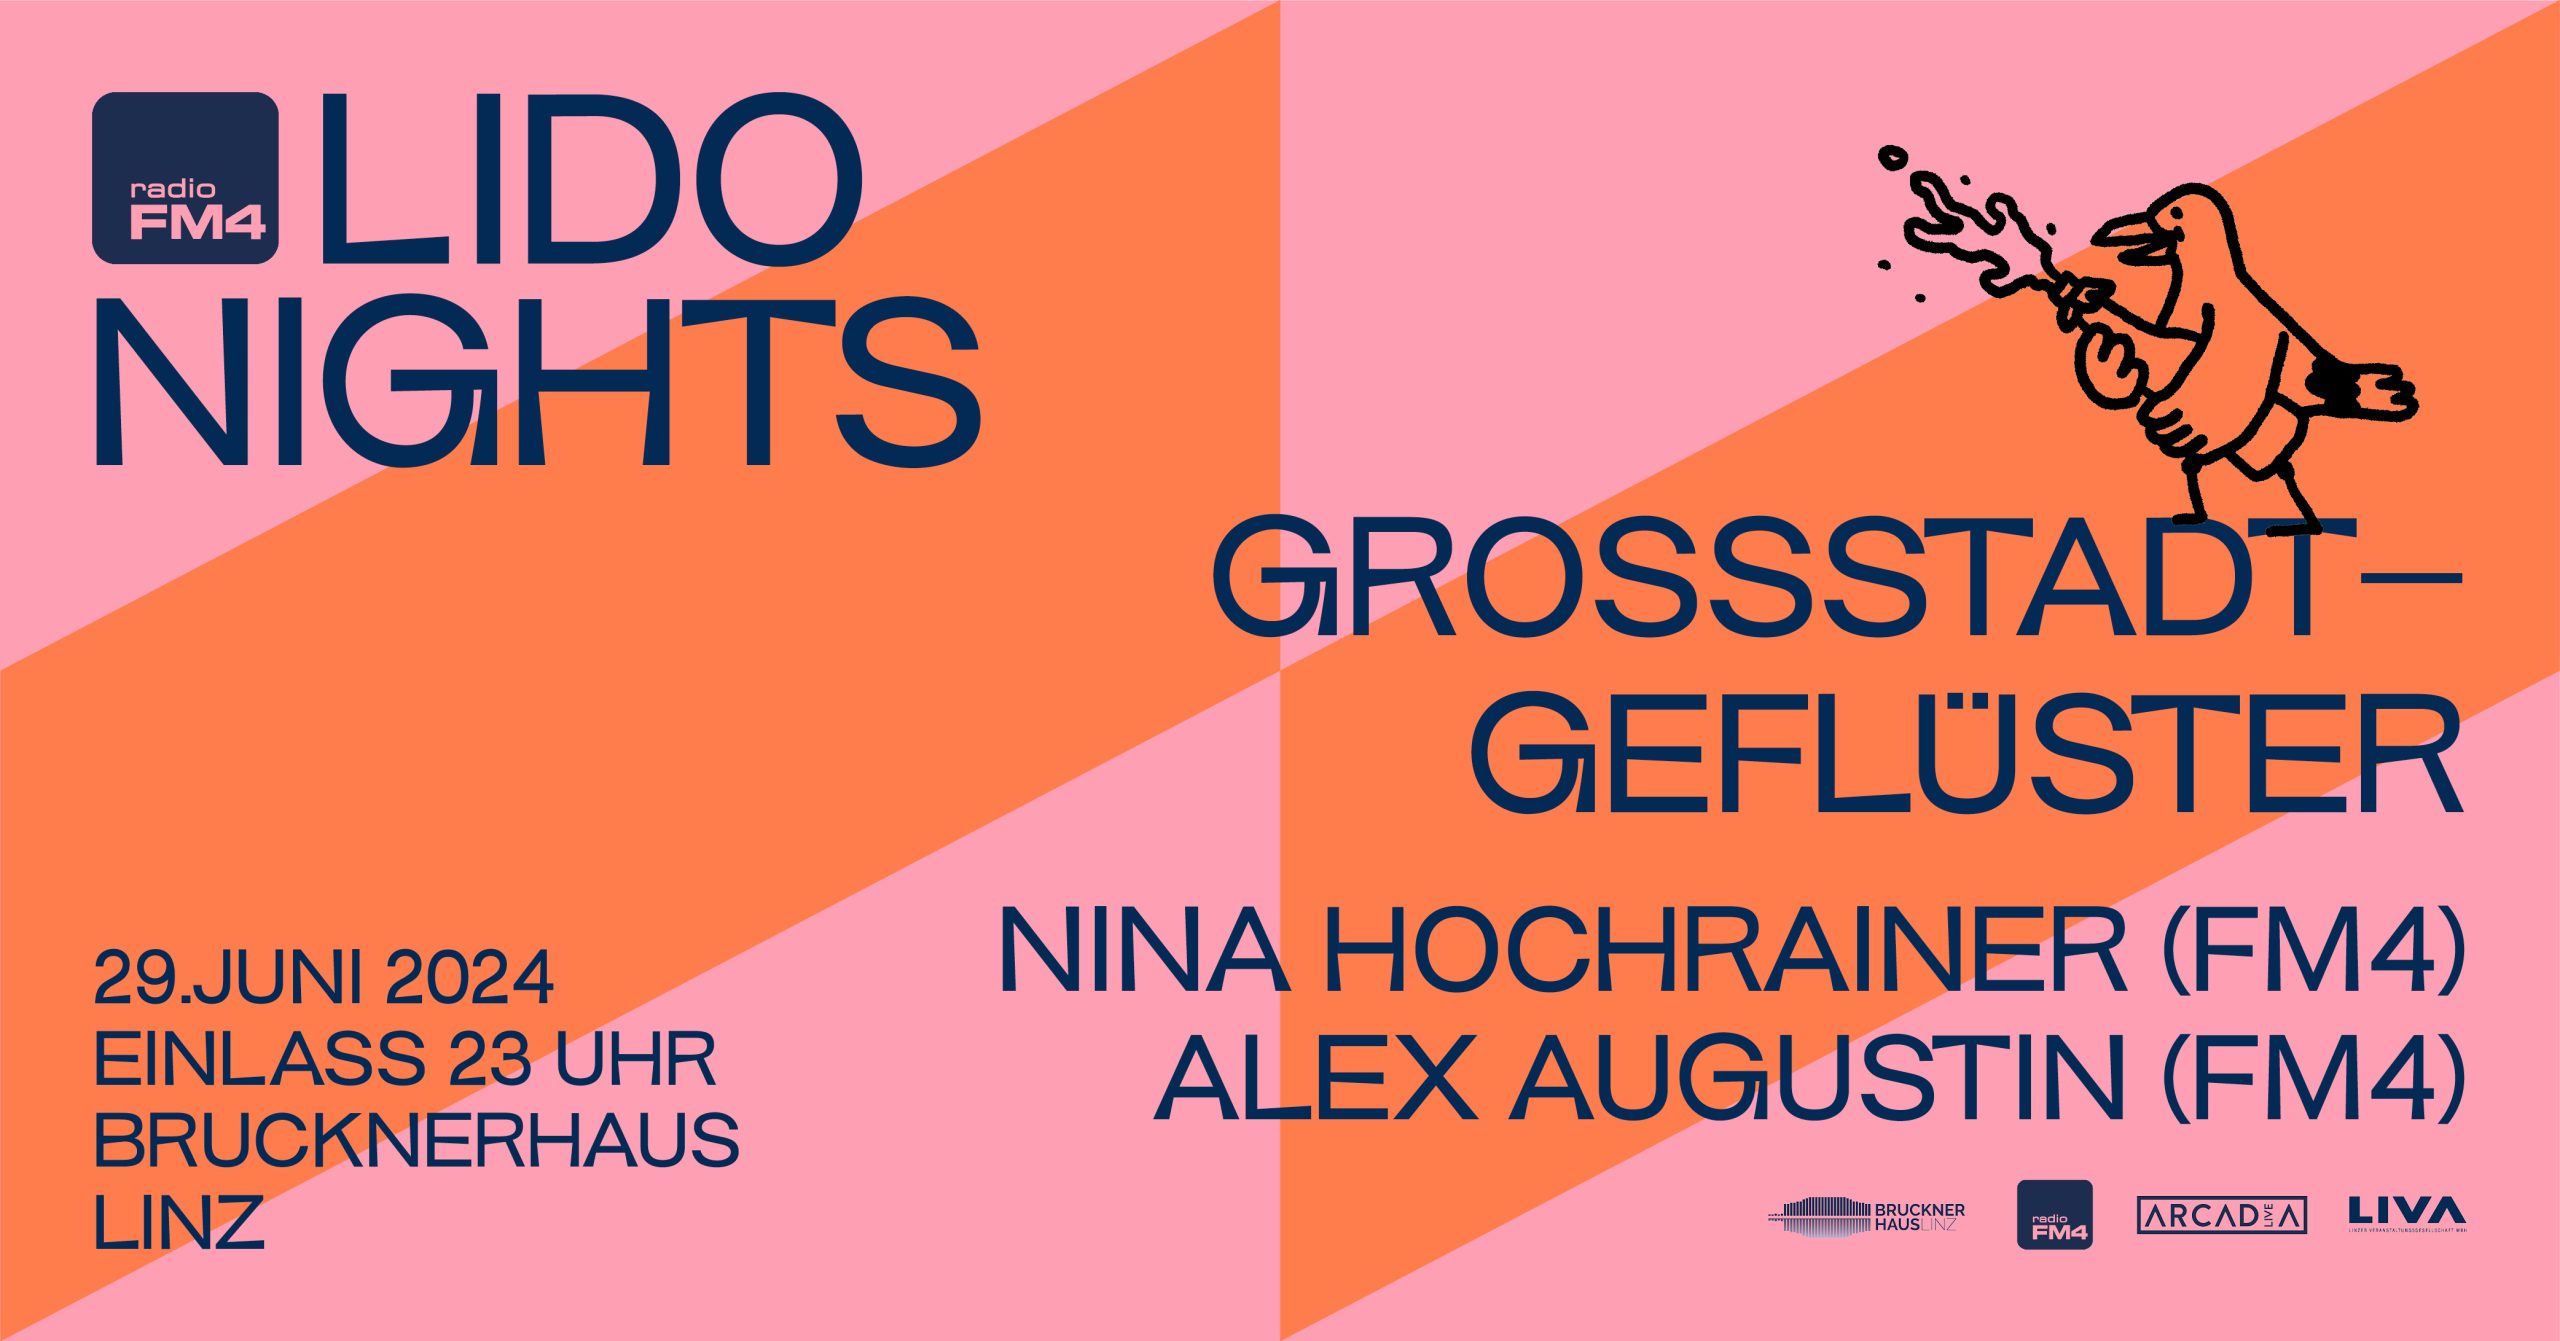 FM4 Lido Nights 2 am 29. June 2024 @ Brucknerhaus.